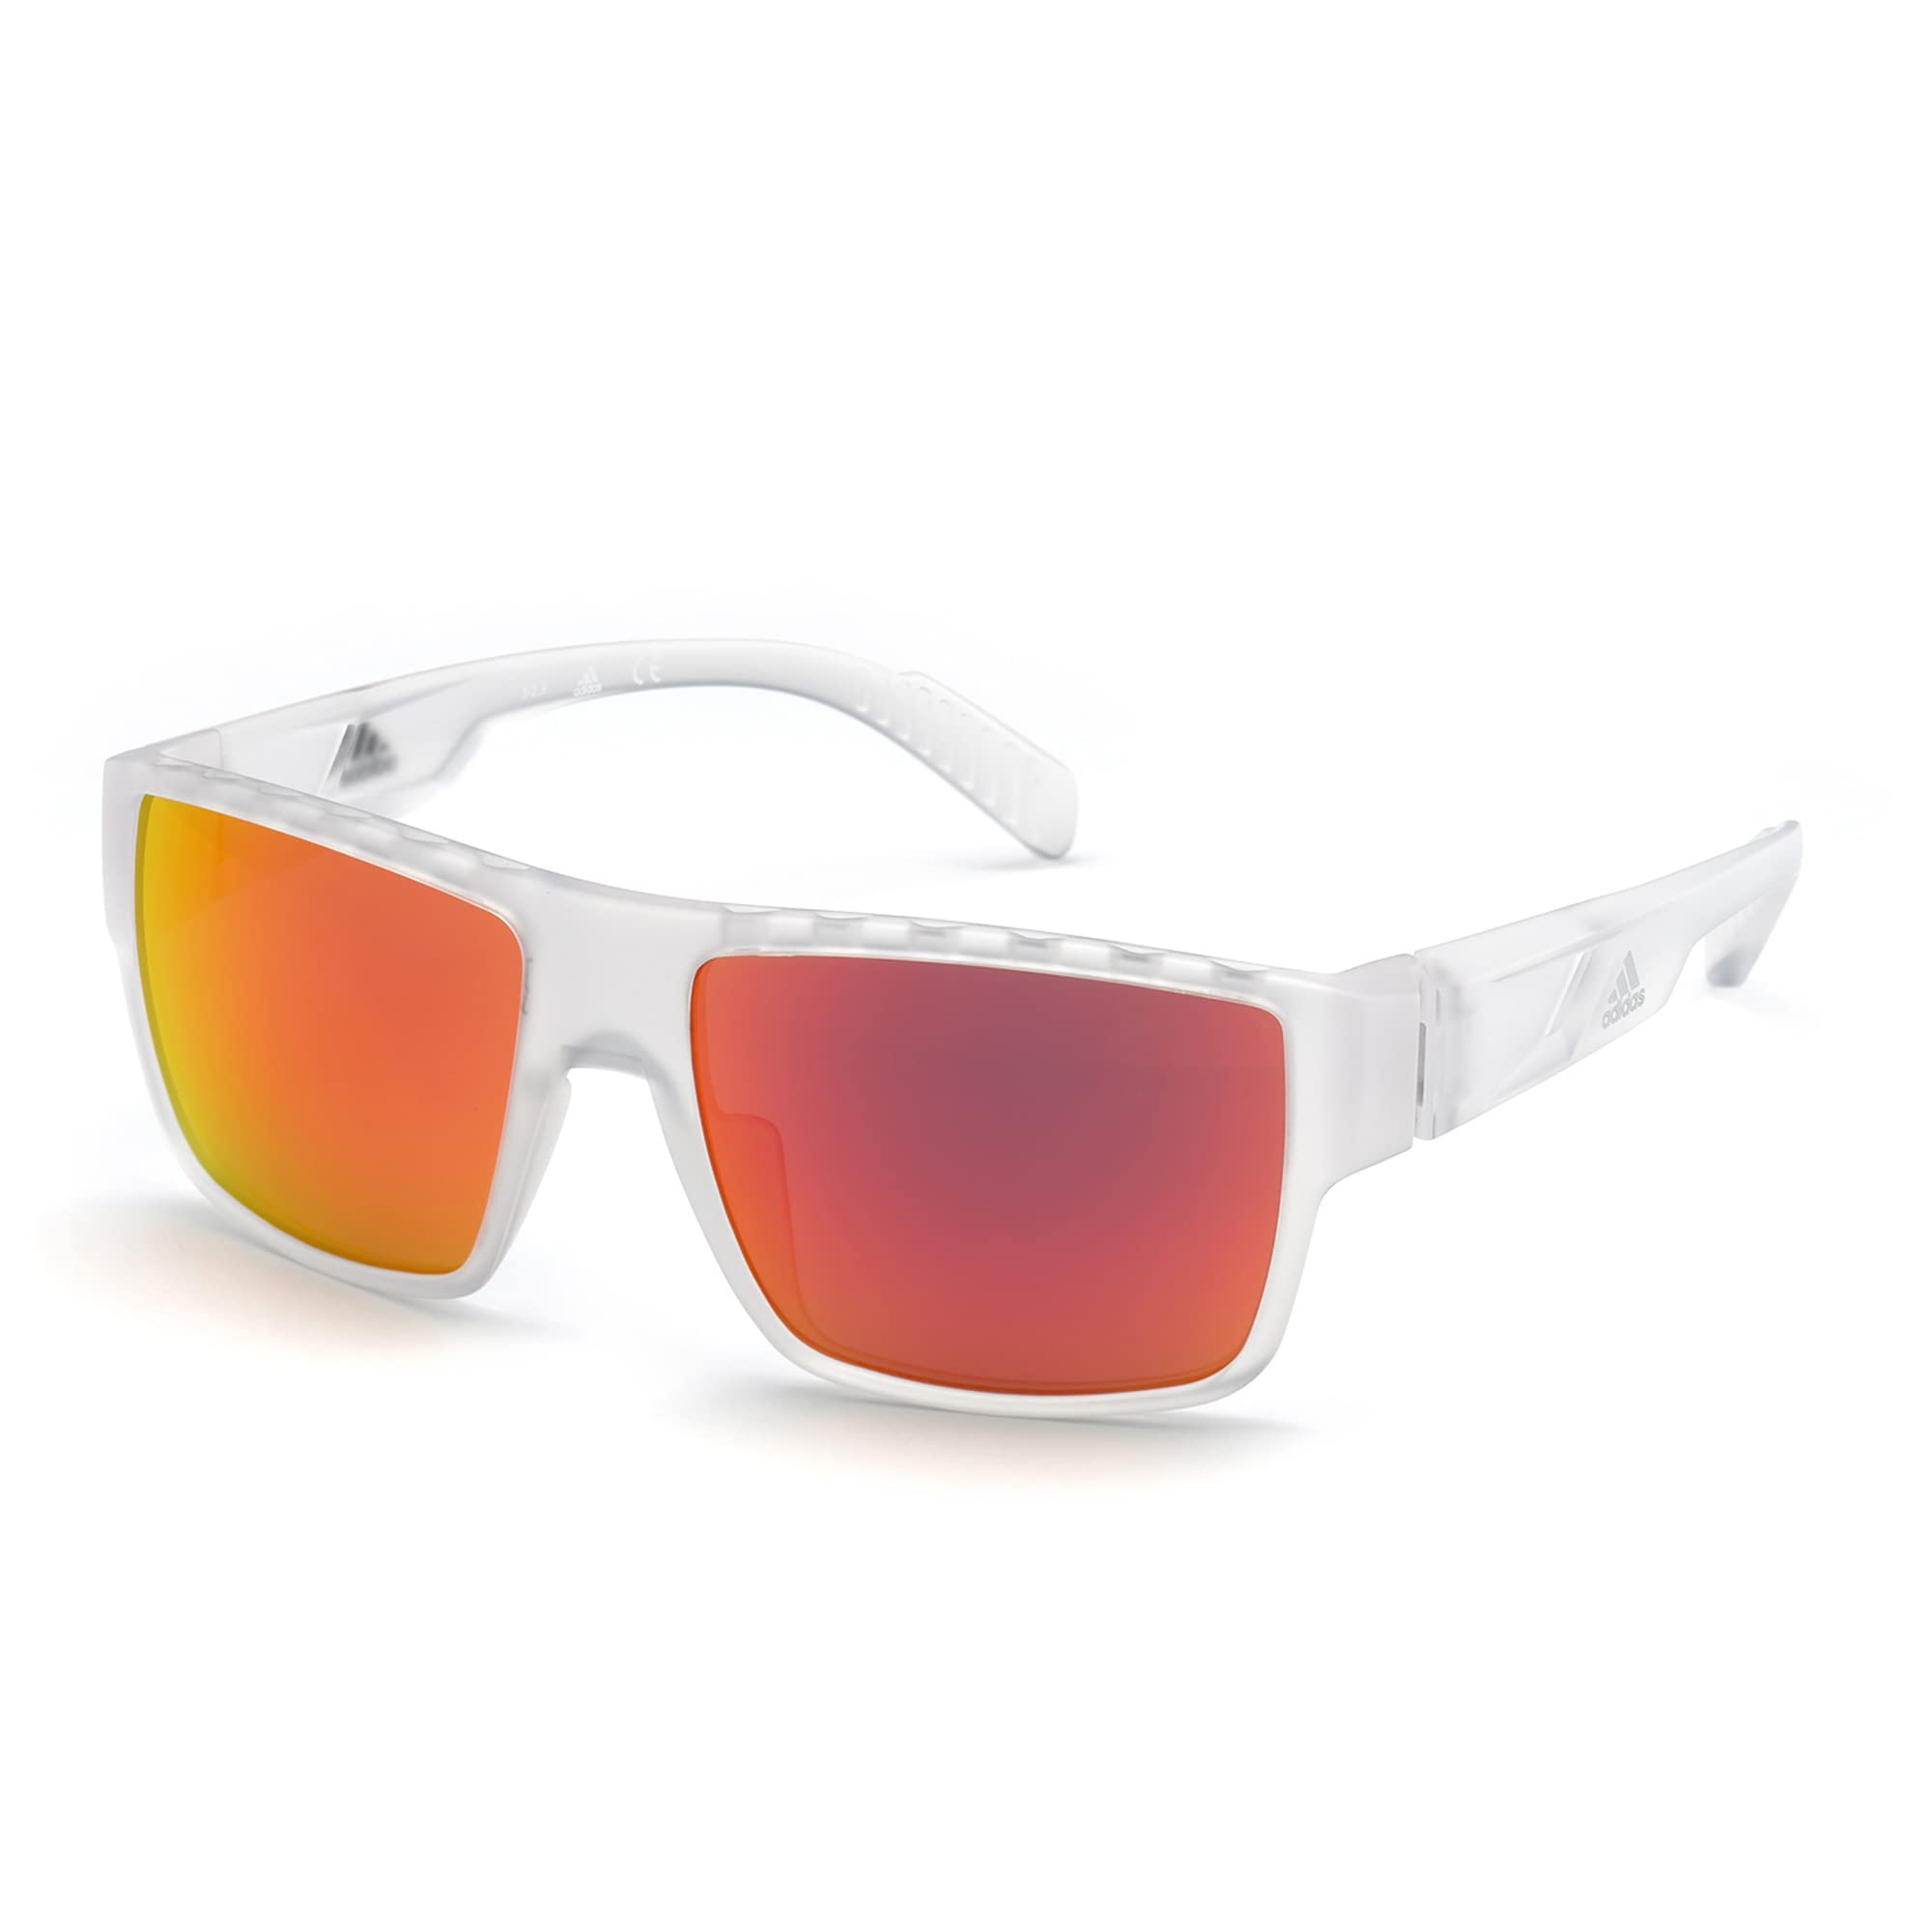 adidas Men's Sp0006 Pilot Sunglasses